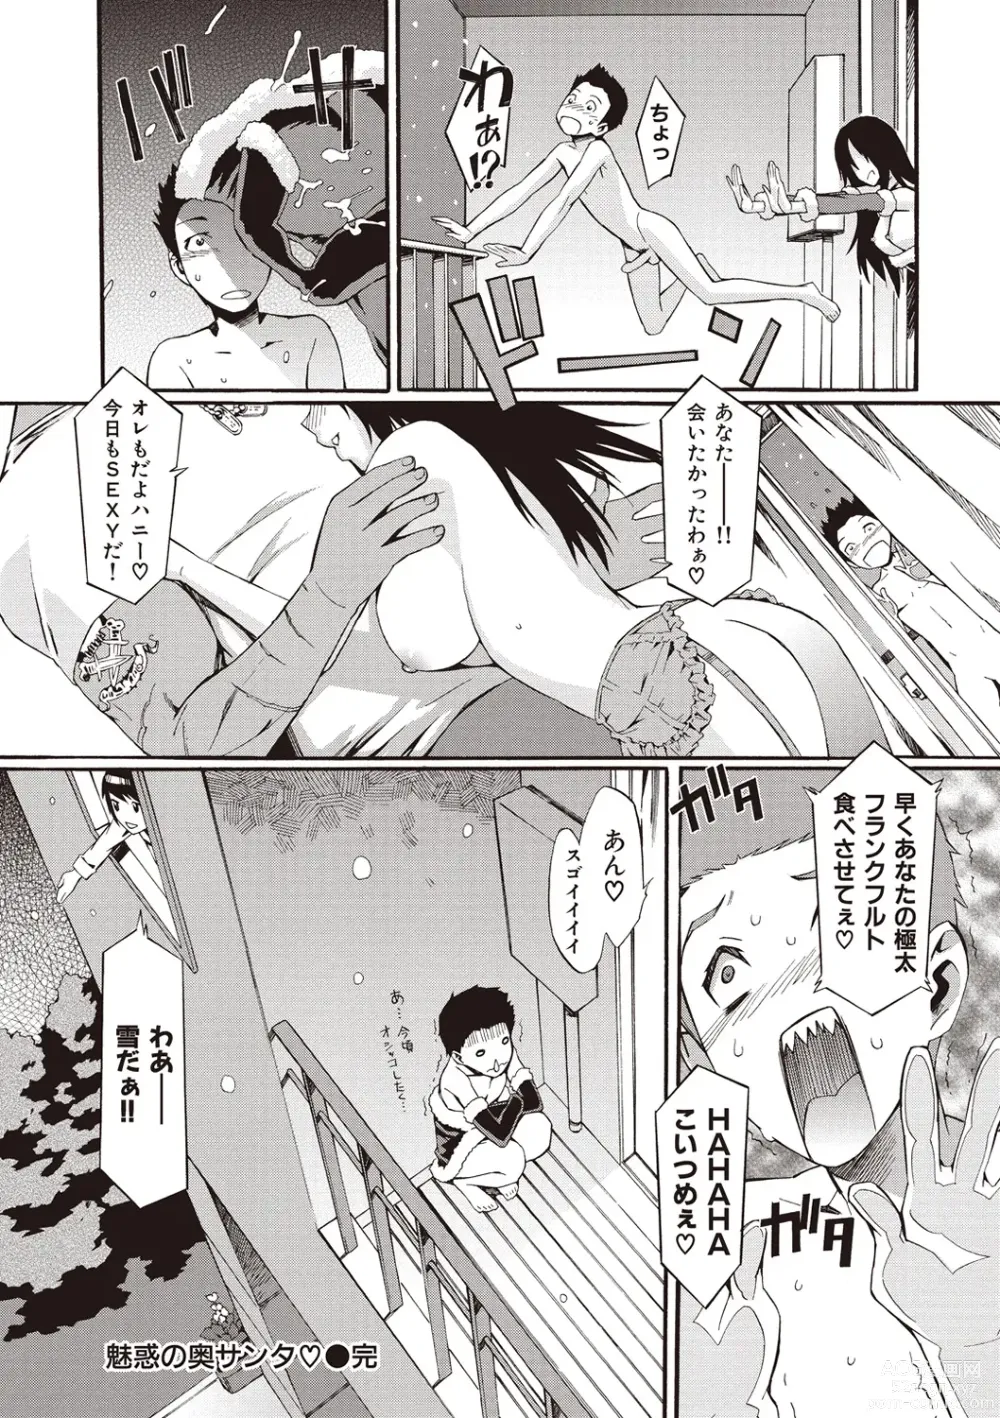 Page 218 of manga Honey Time